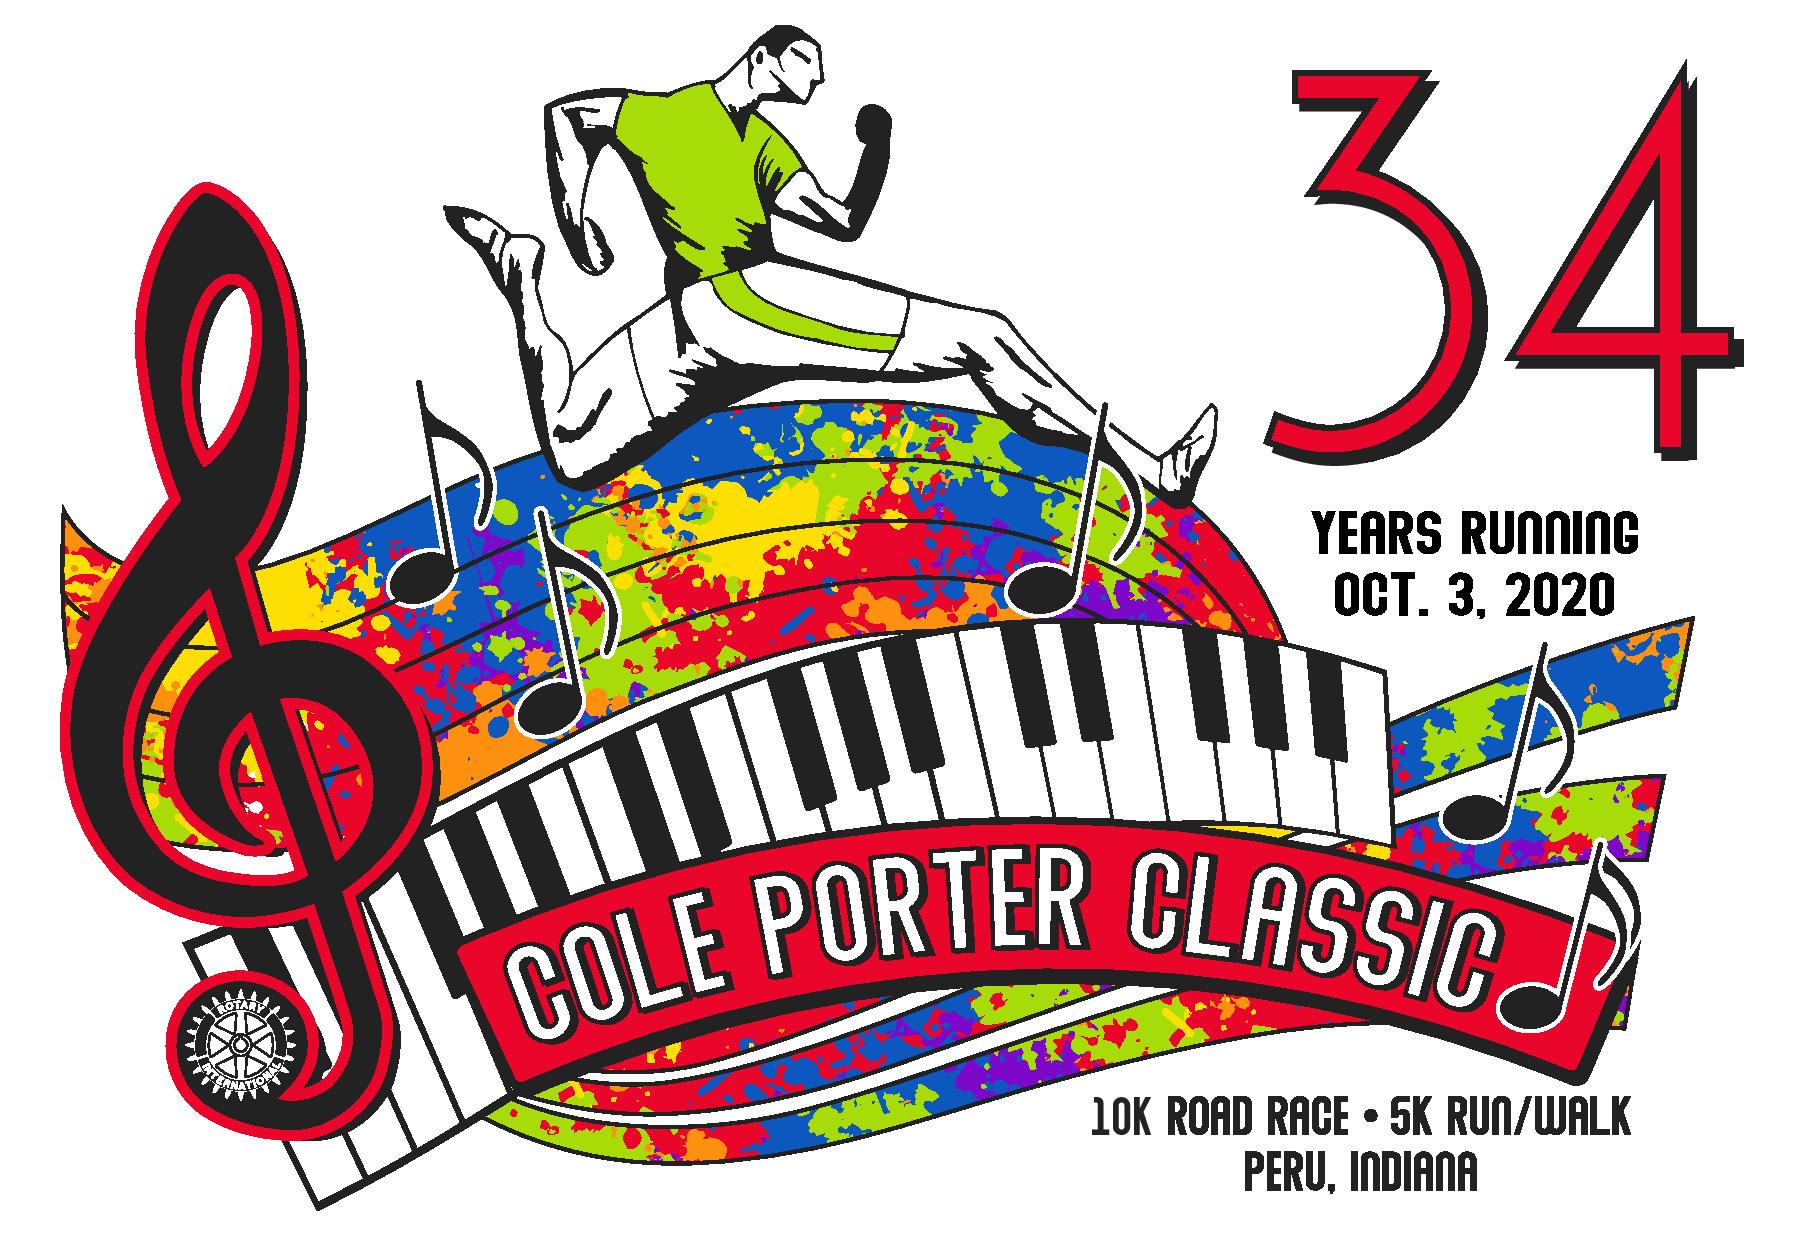 Cole Porter Classic logo on RaceRaves